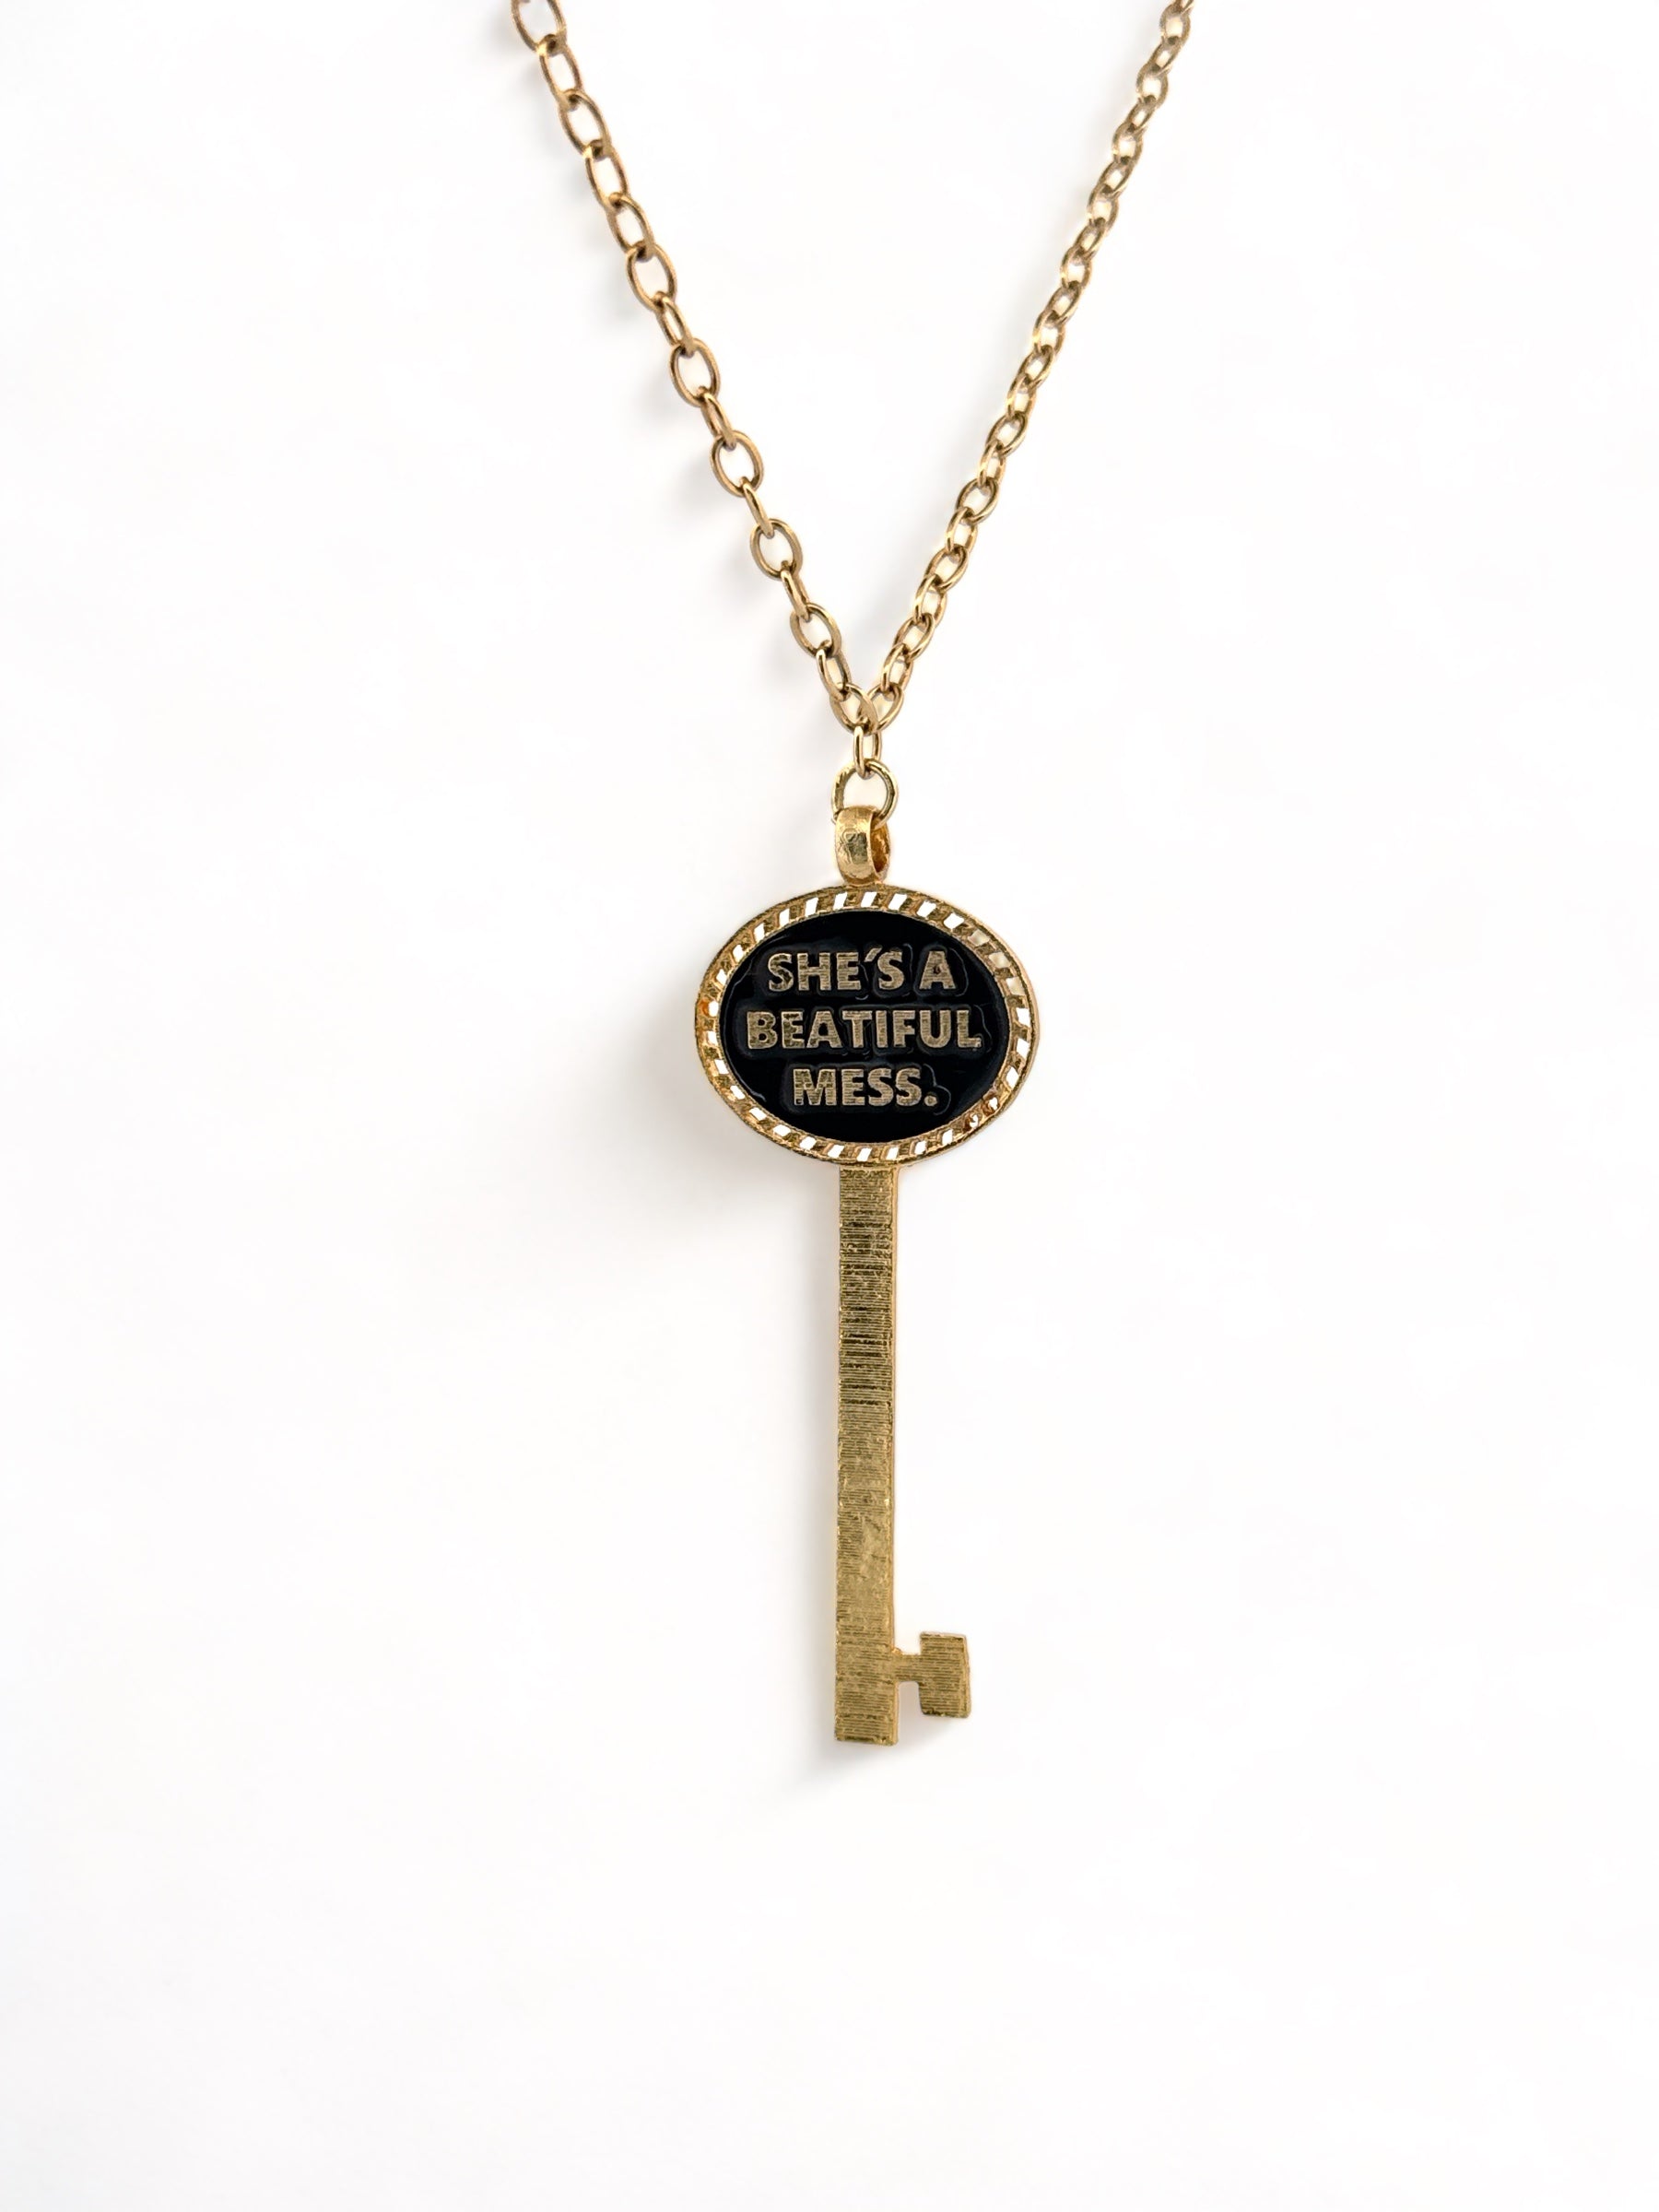 She’s a beautiful mess key, handmade key pendant necklace